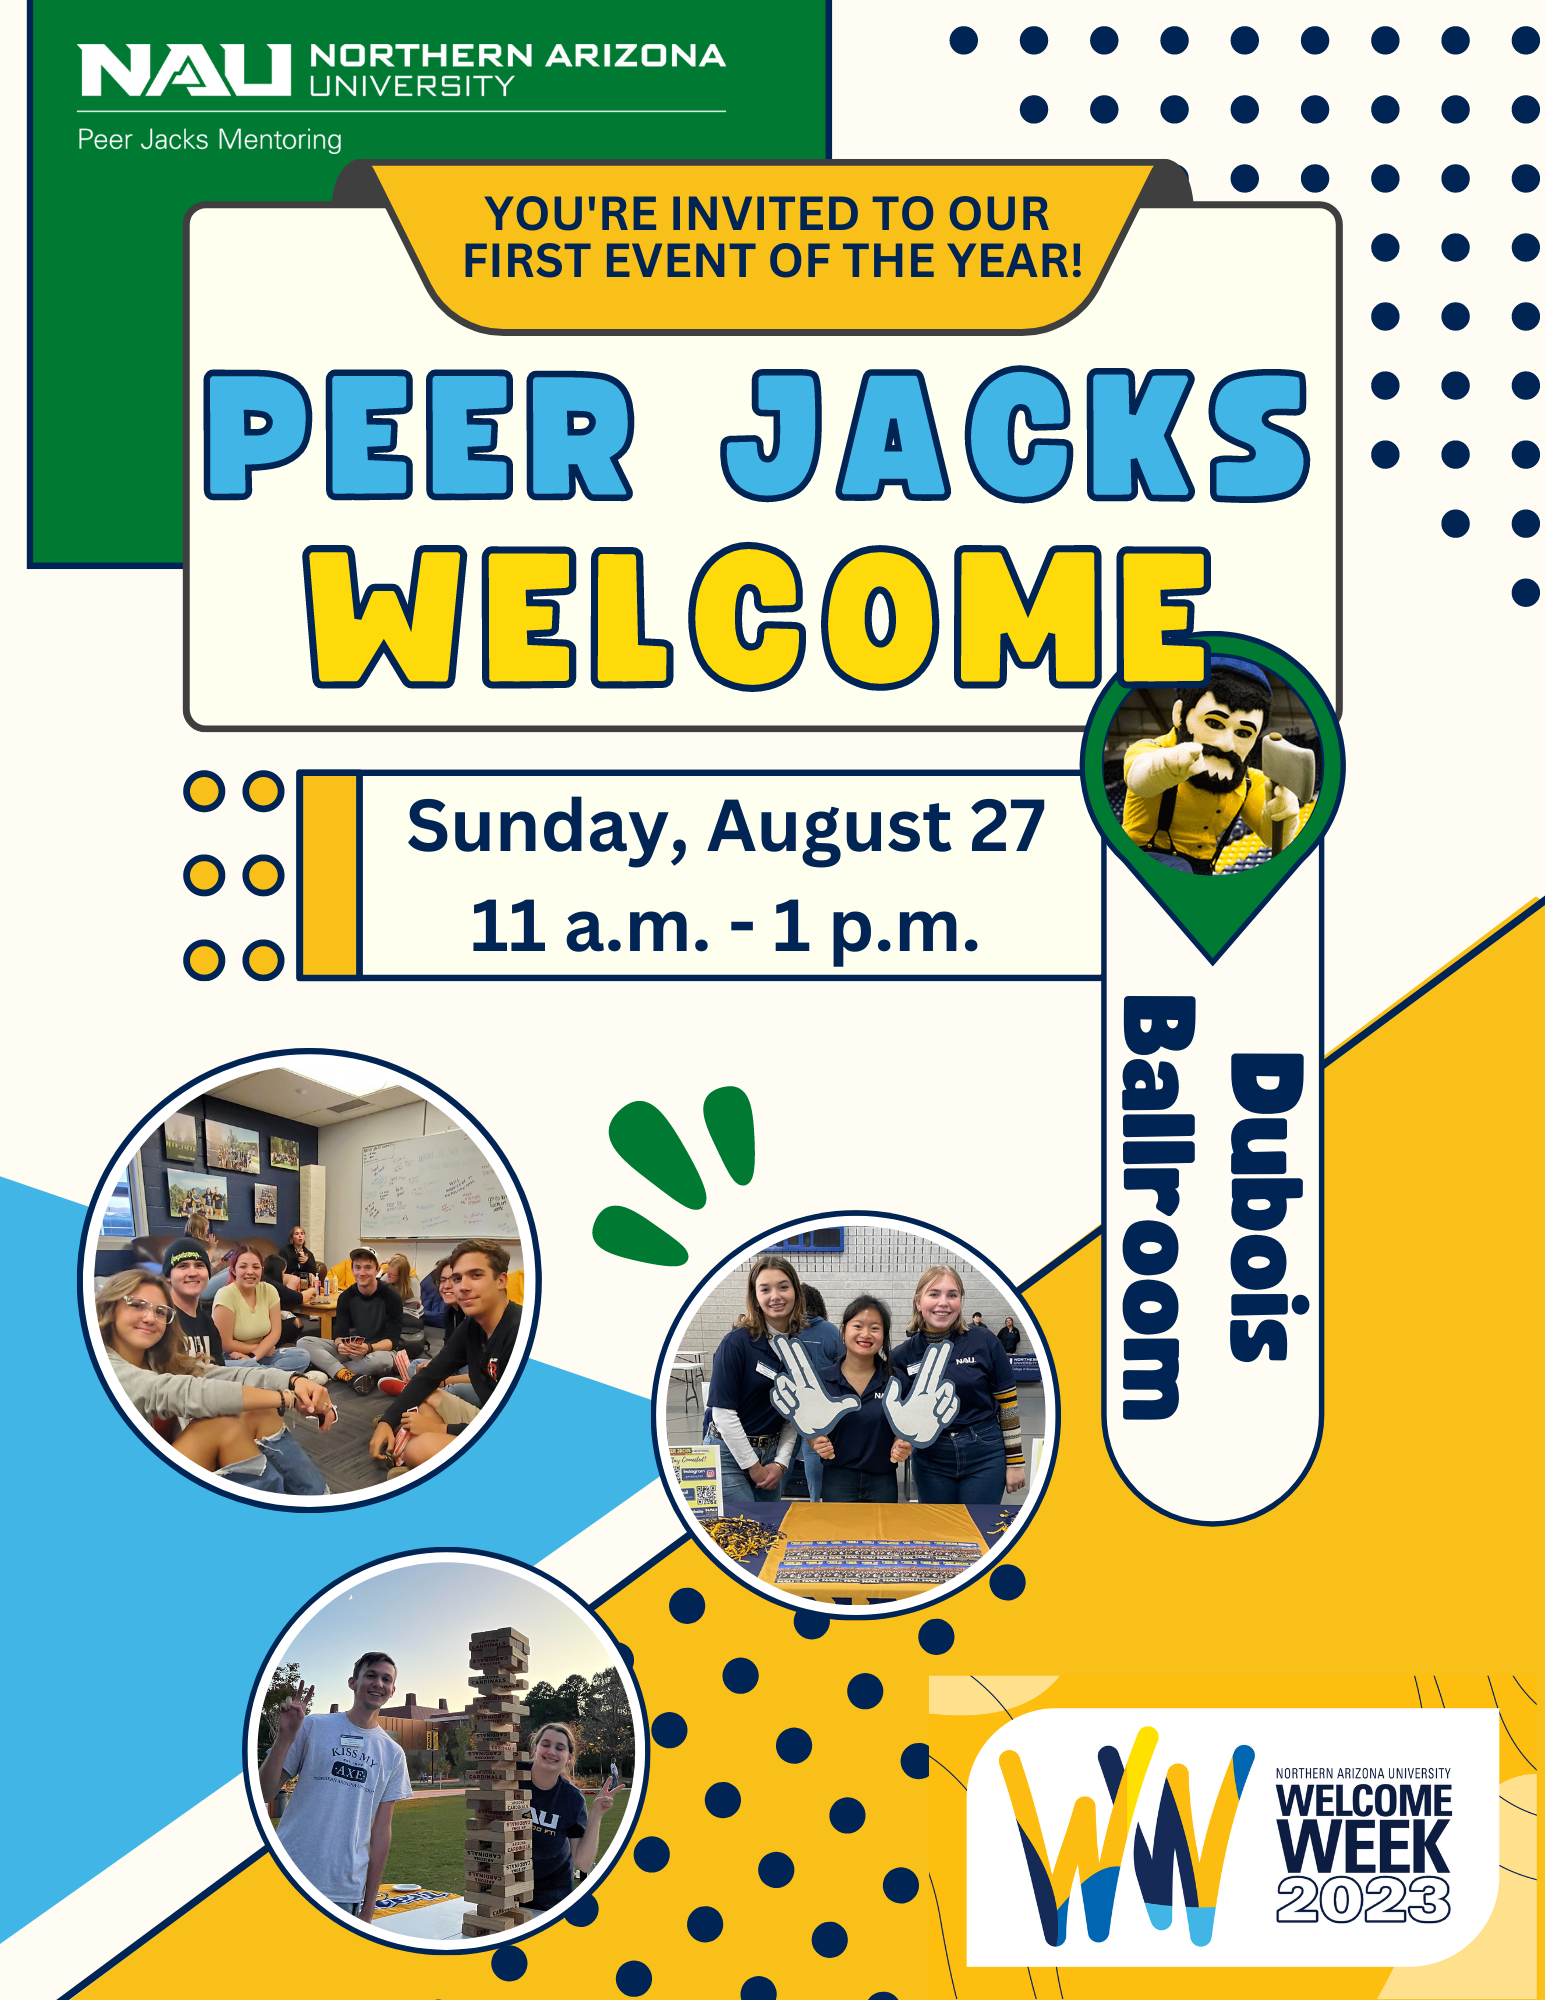 Peer Jacks Welcome Event.png